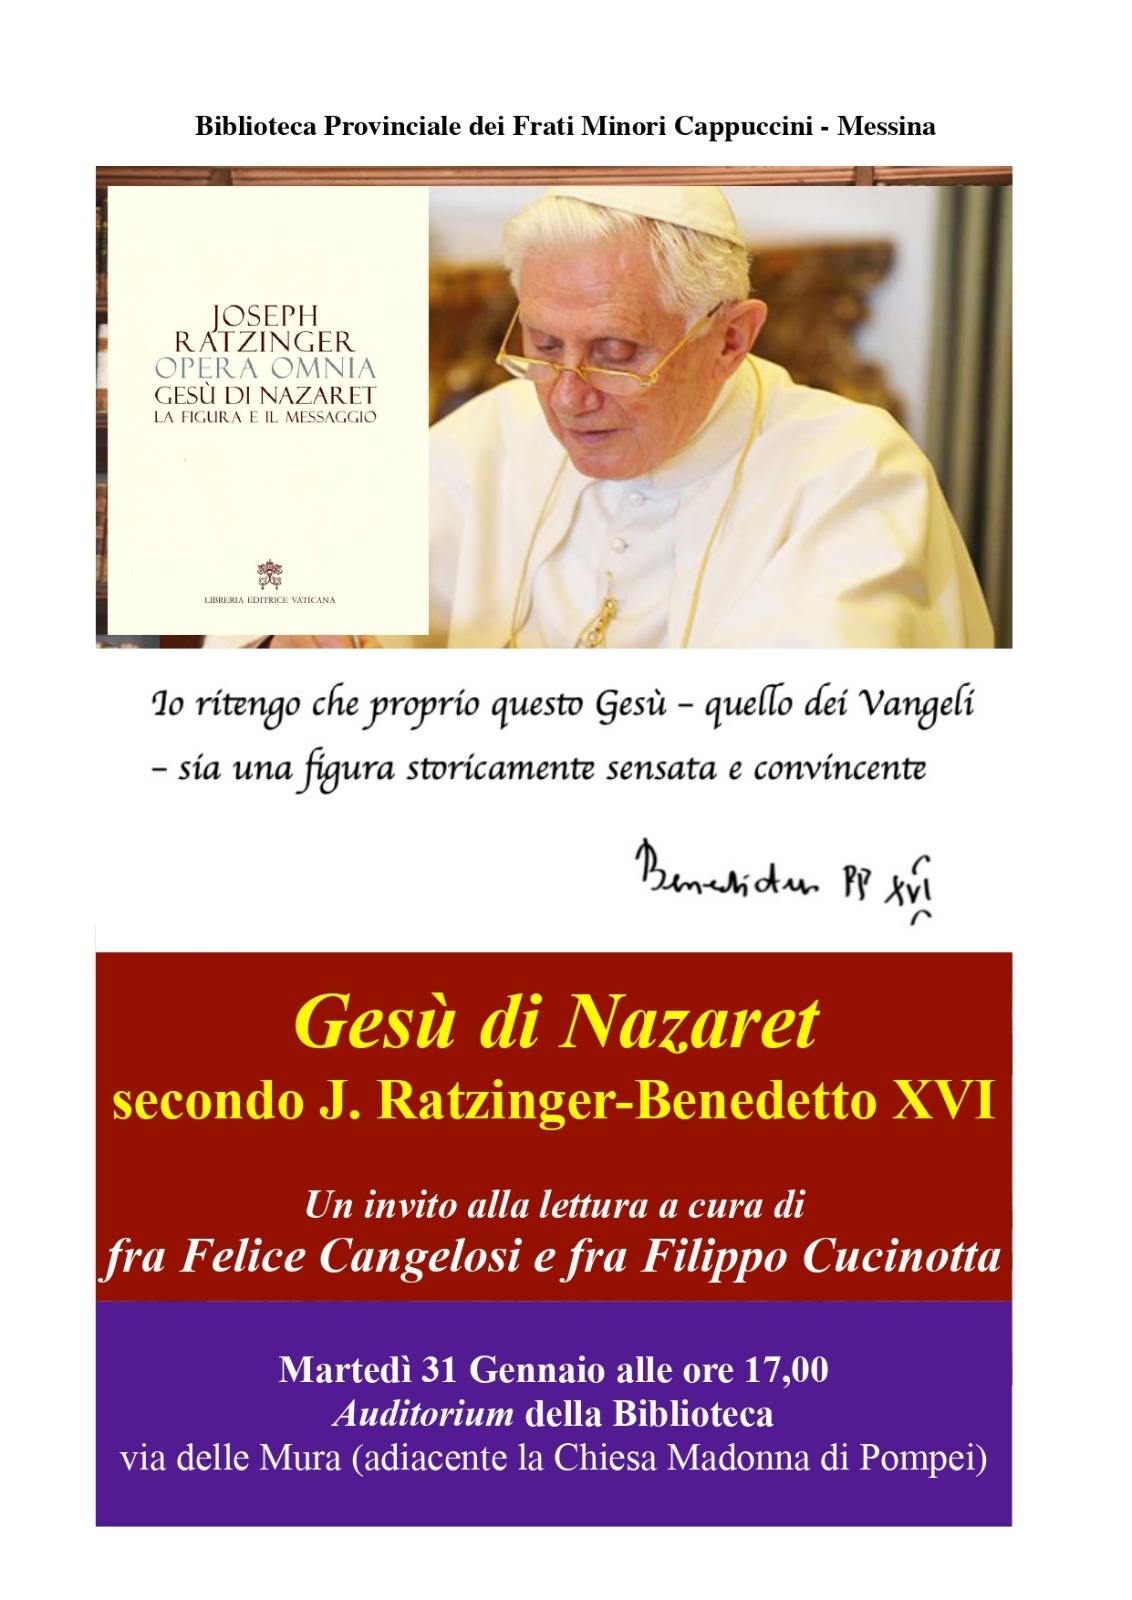 Gesu di Nazaret secondo J. Ratzinger-Benedetto XVI